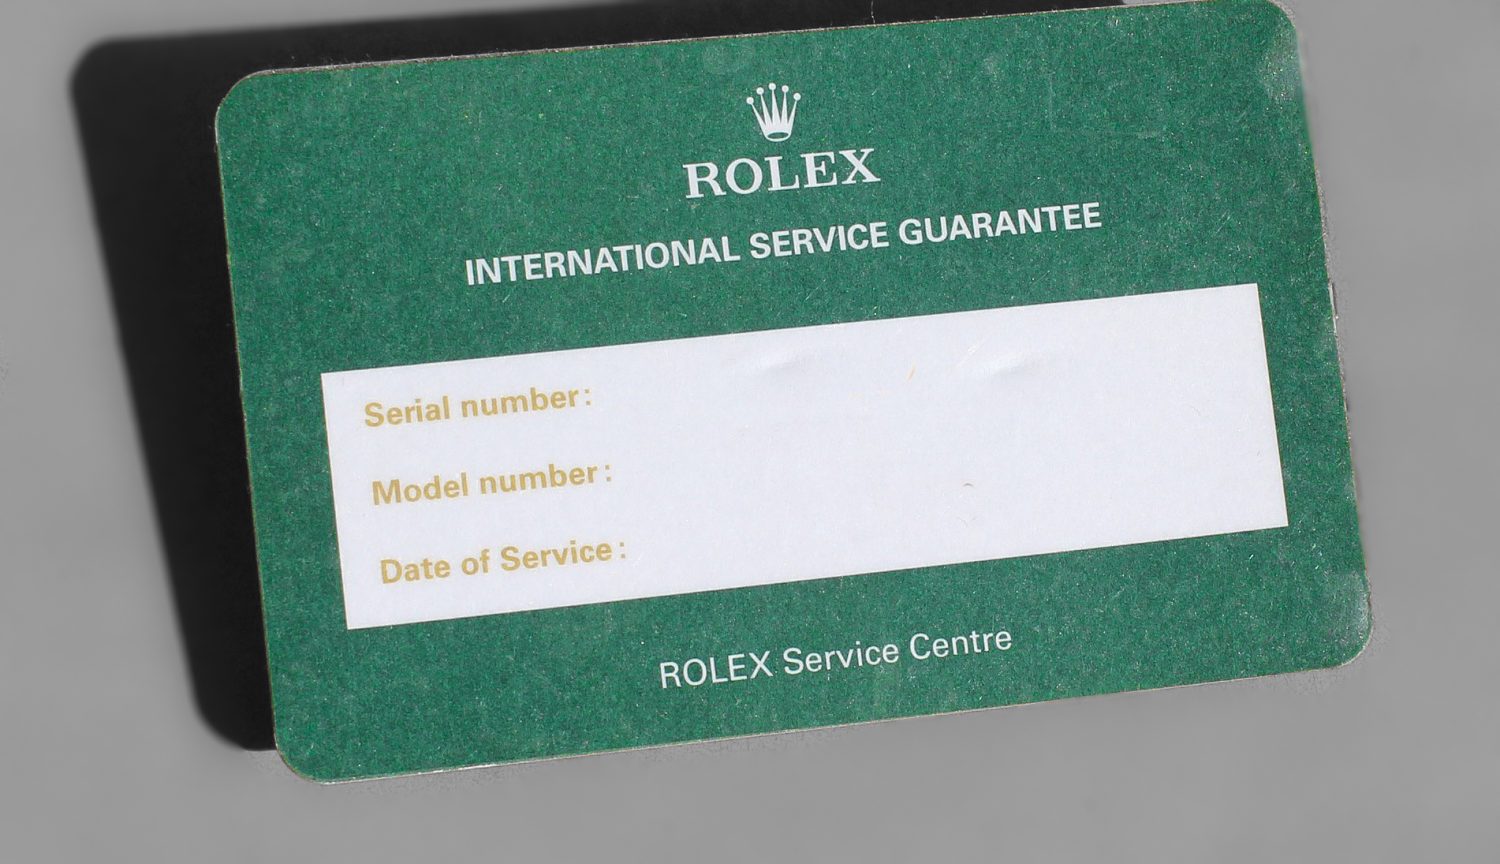 Rolex Service guarantee